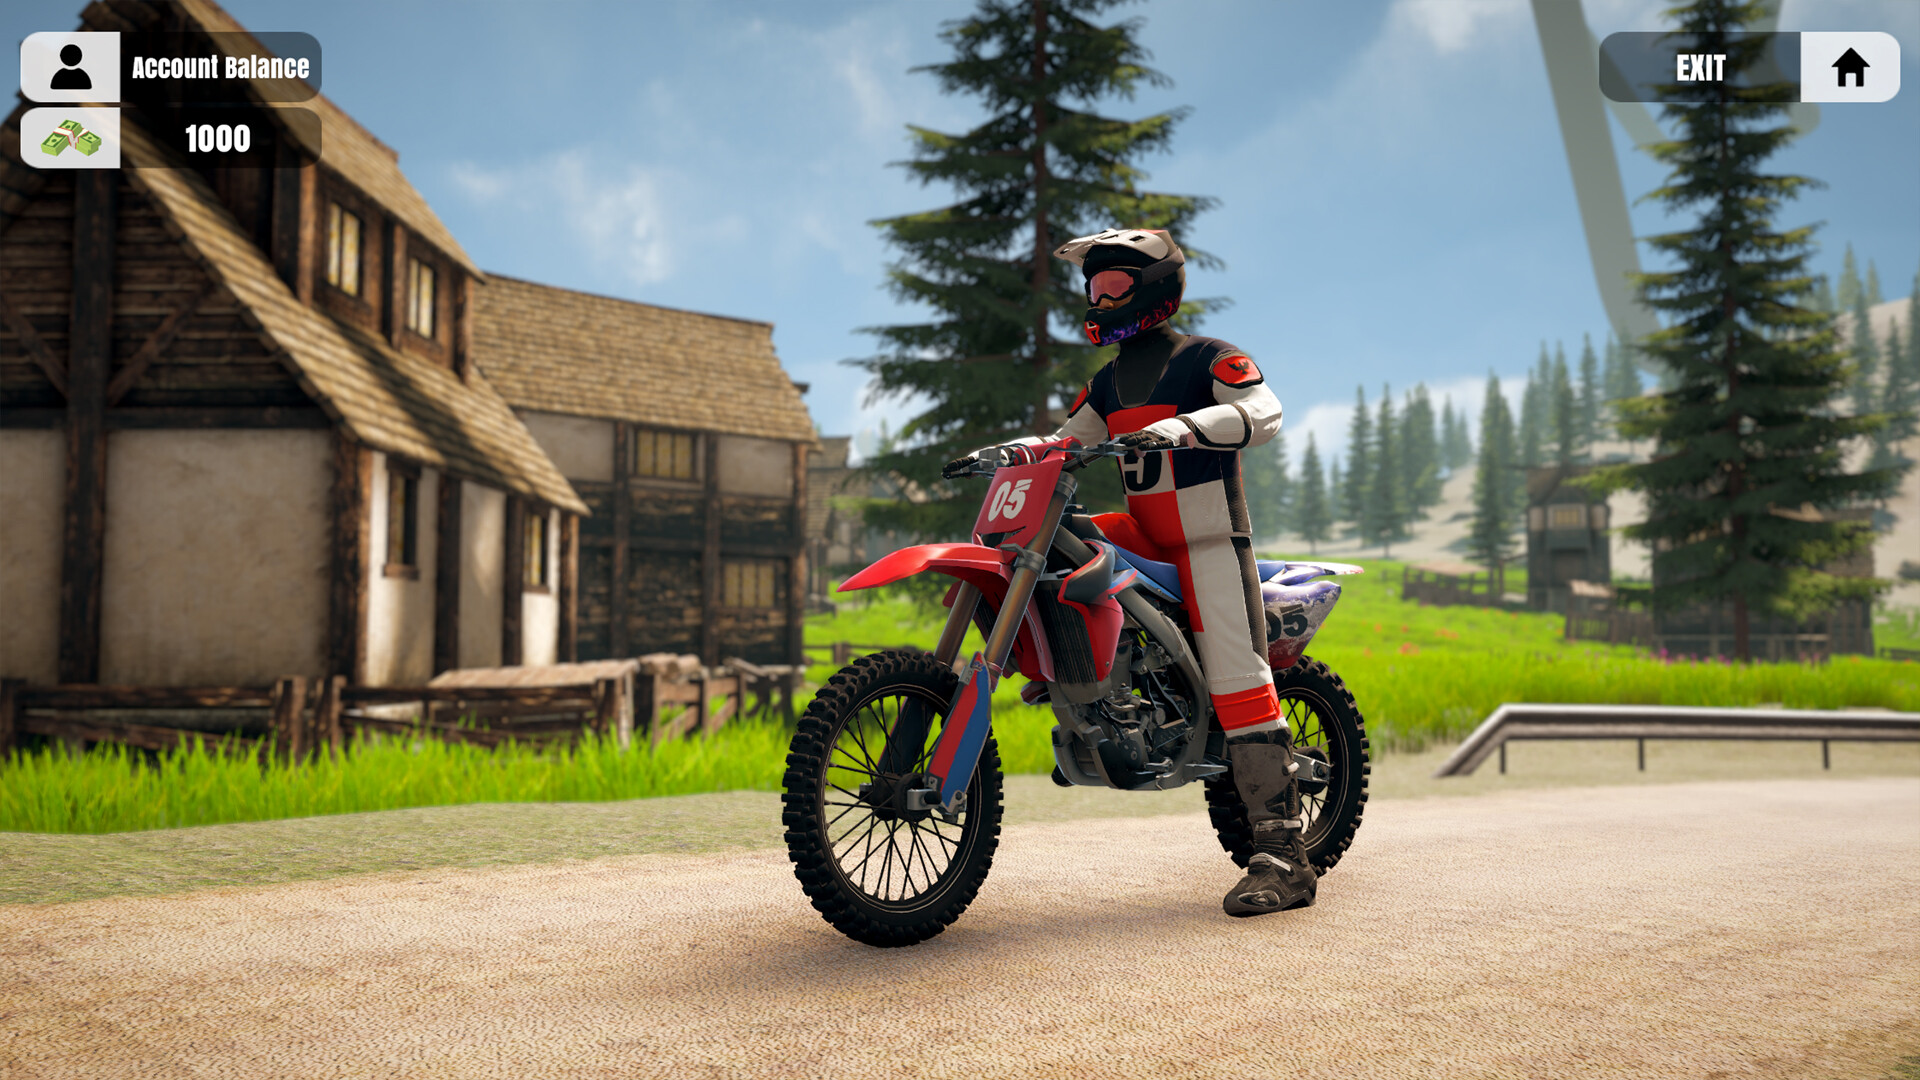 MX Bikes - Dirt Bike Games on the App Store